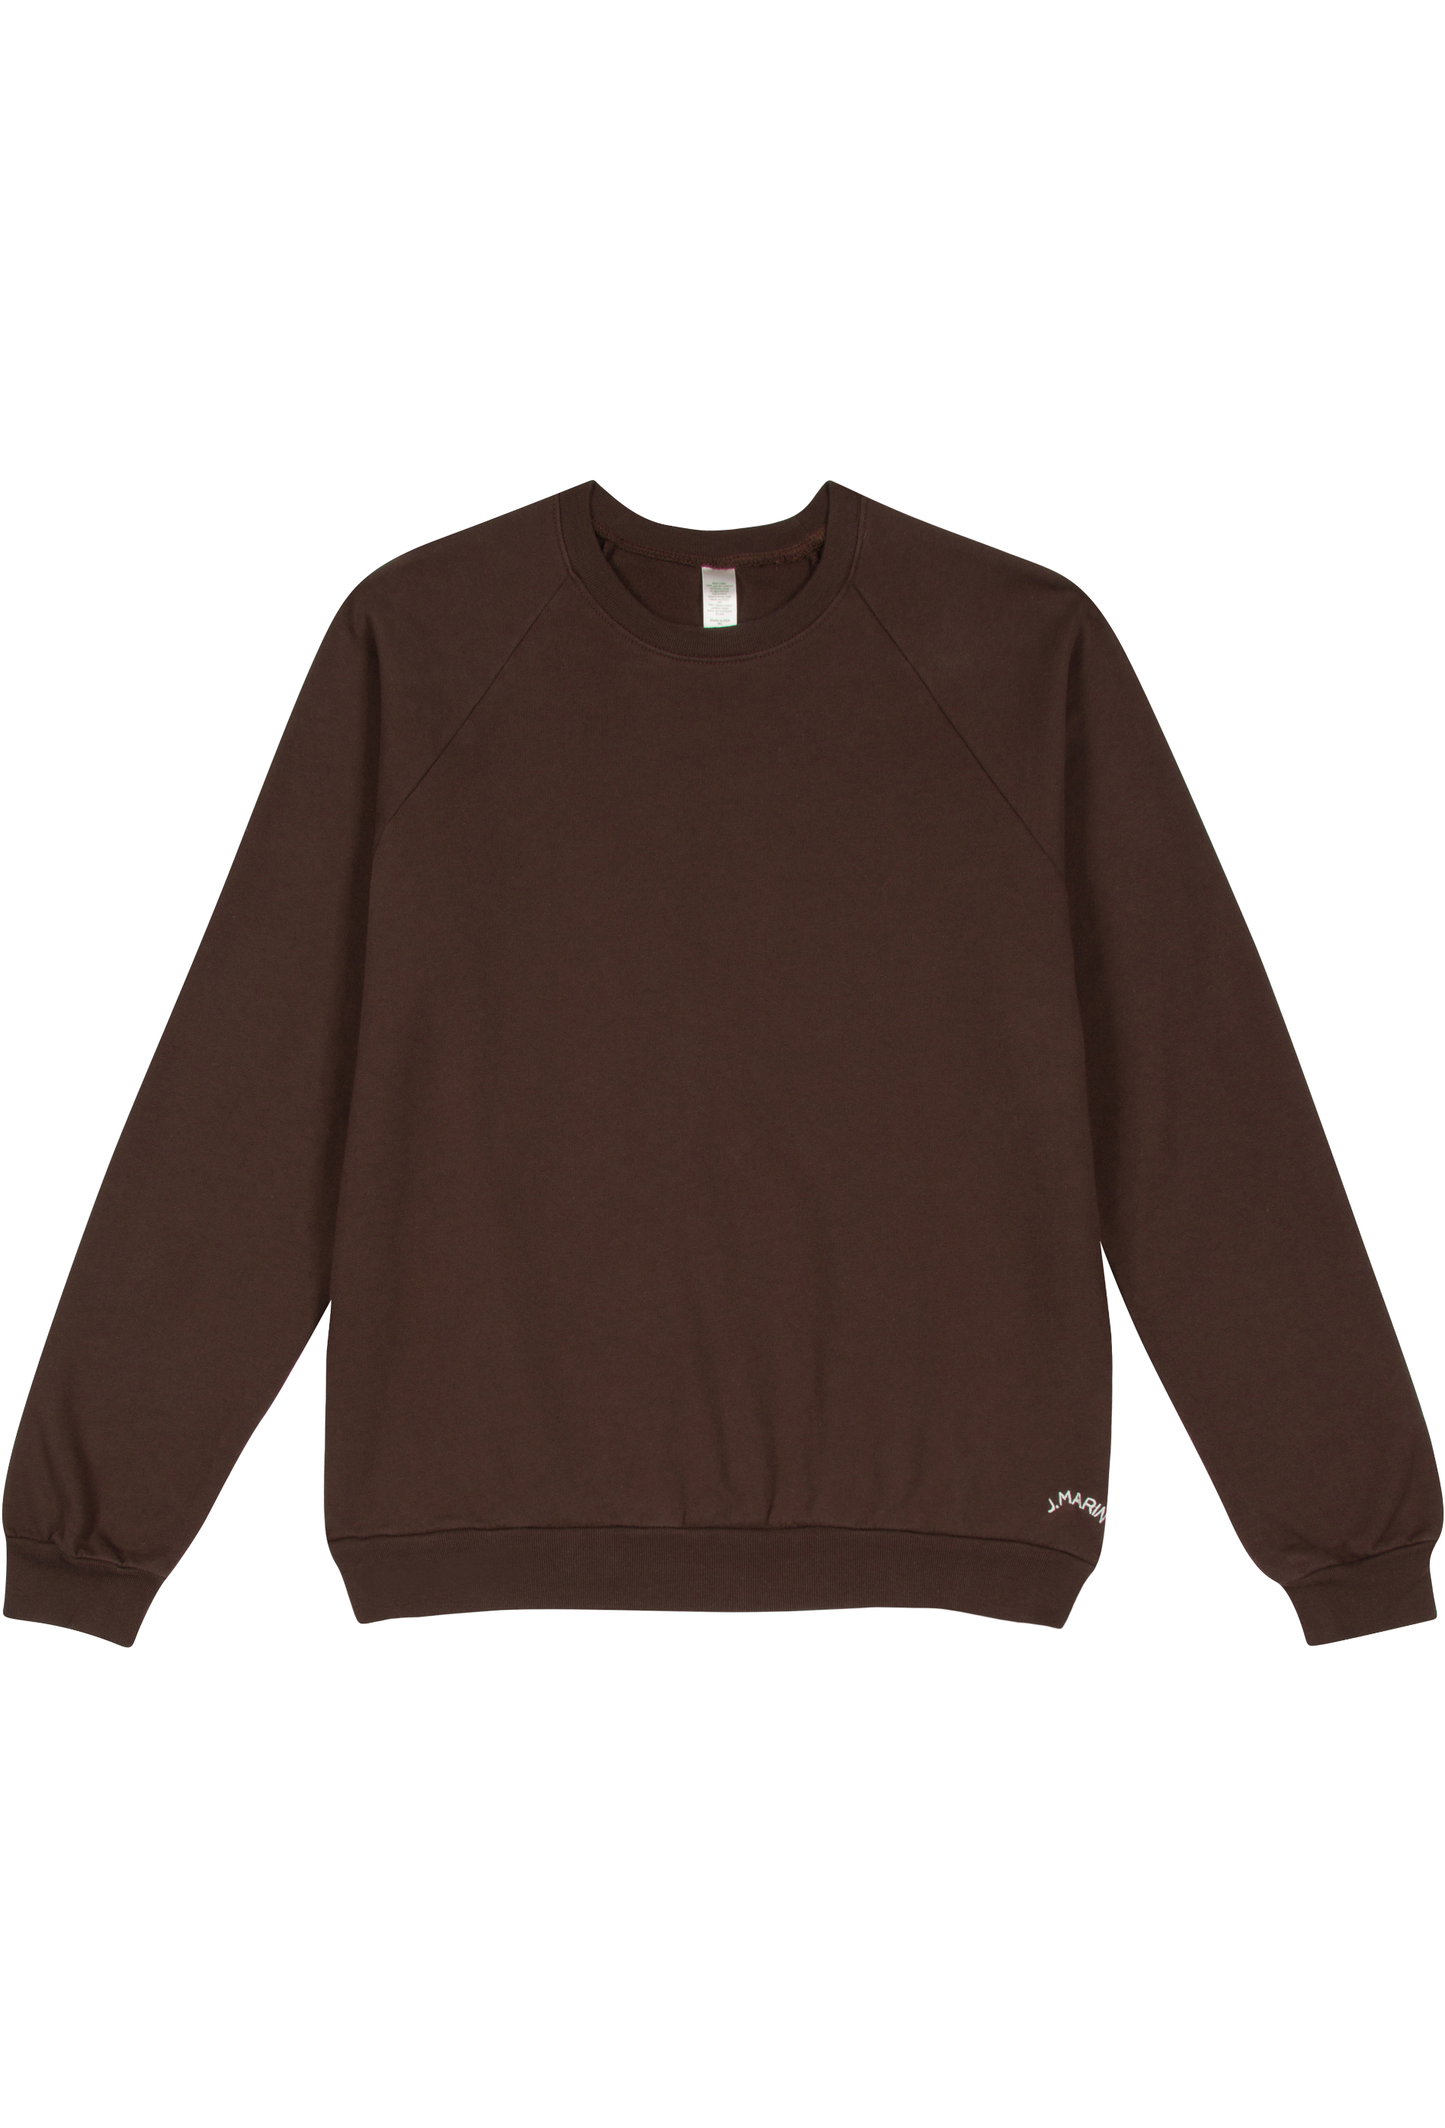 Retro Raglan Gym Sweatshirt - Organic Cotton Hand-Dye - Espresso Brown - J. Marin